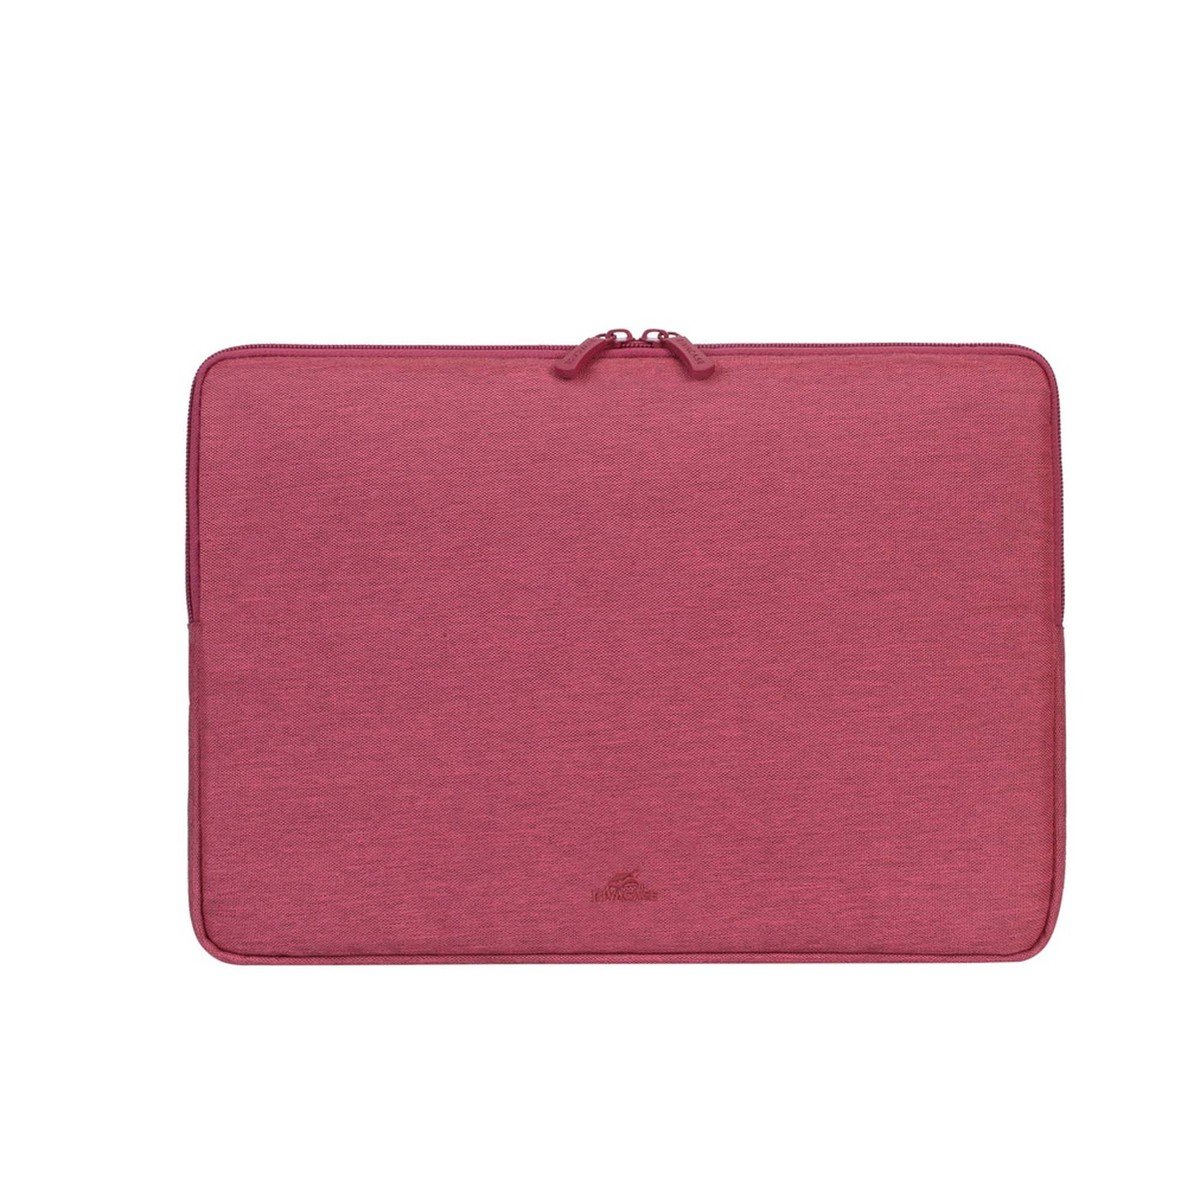 Rivacase Macbook Case7704 14 inch Red